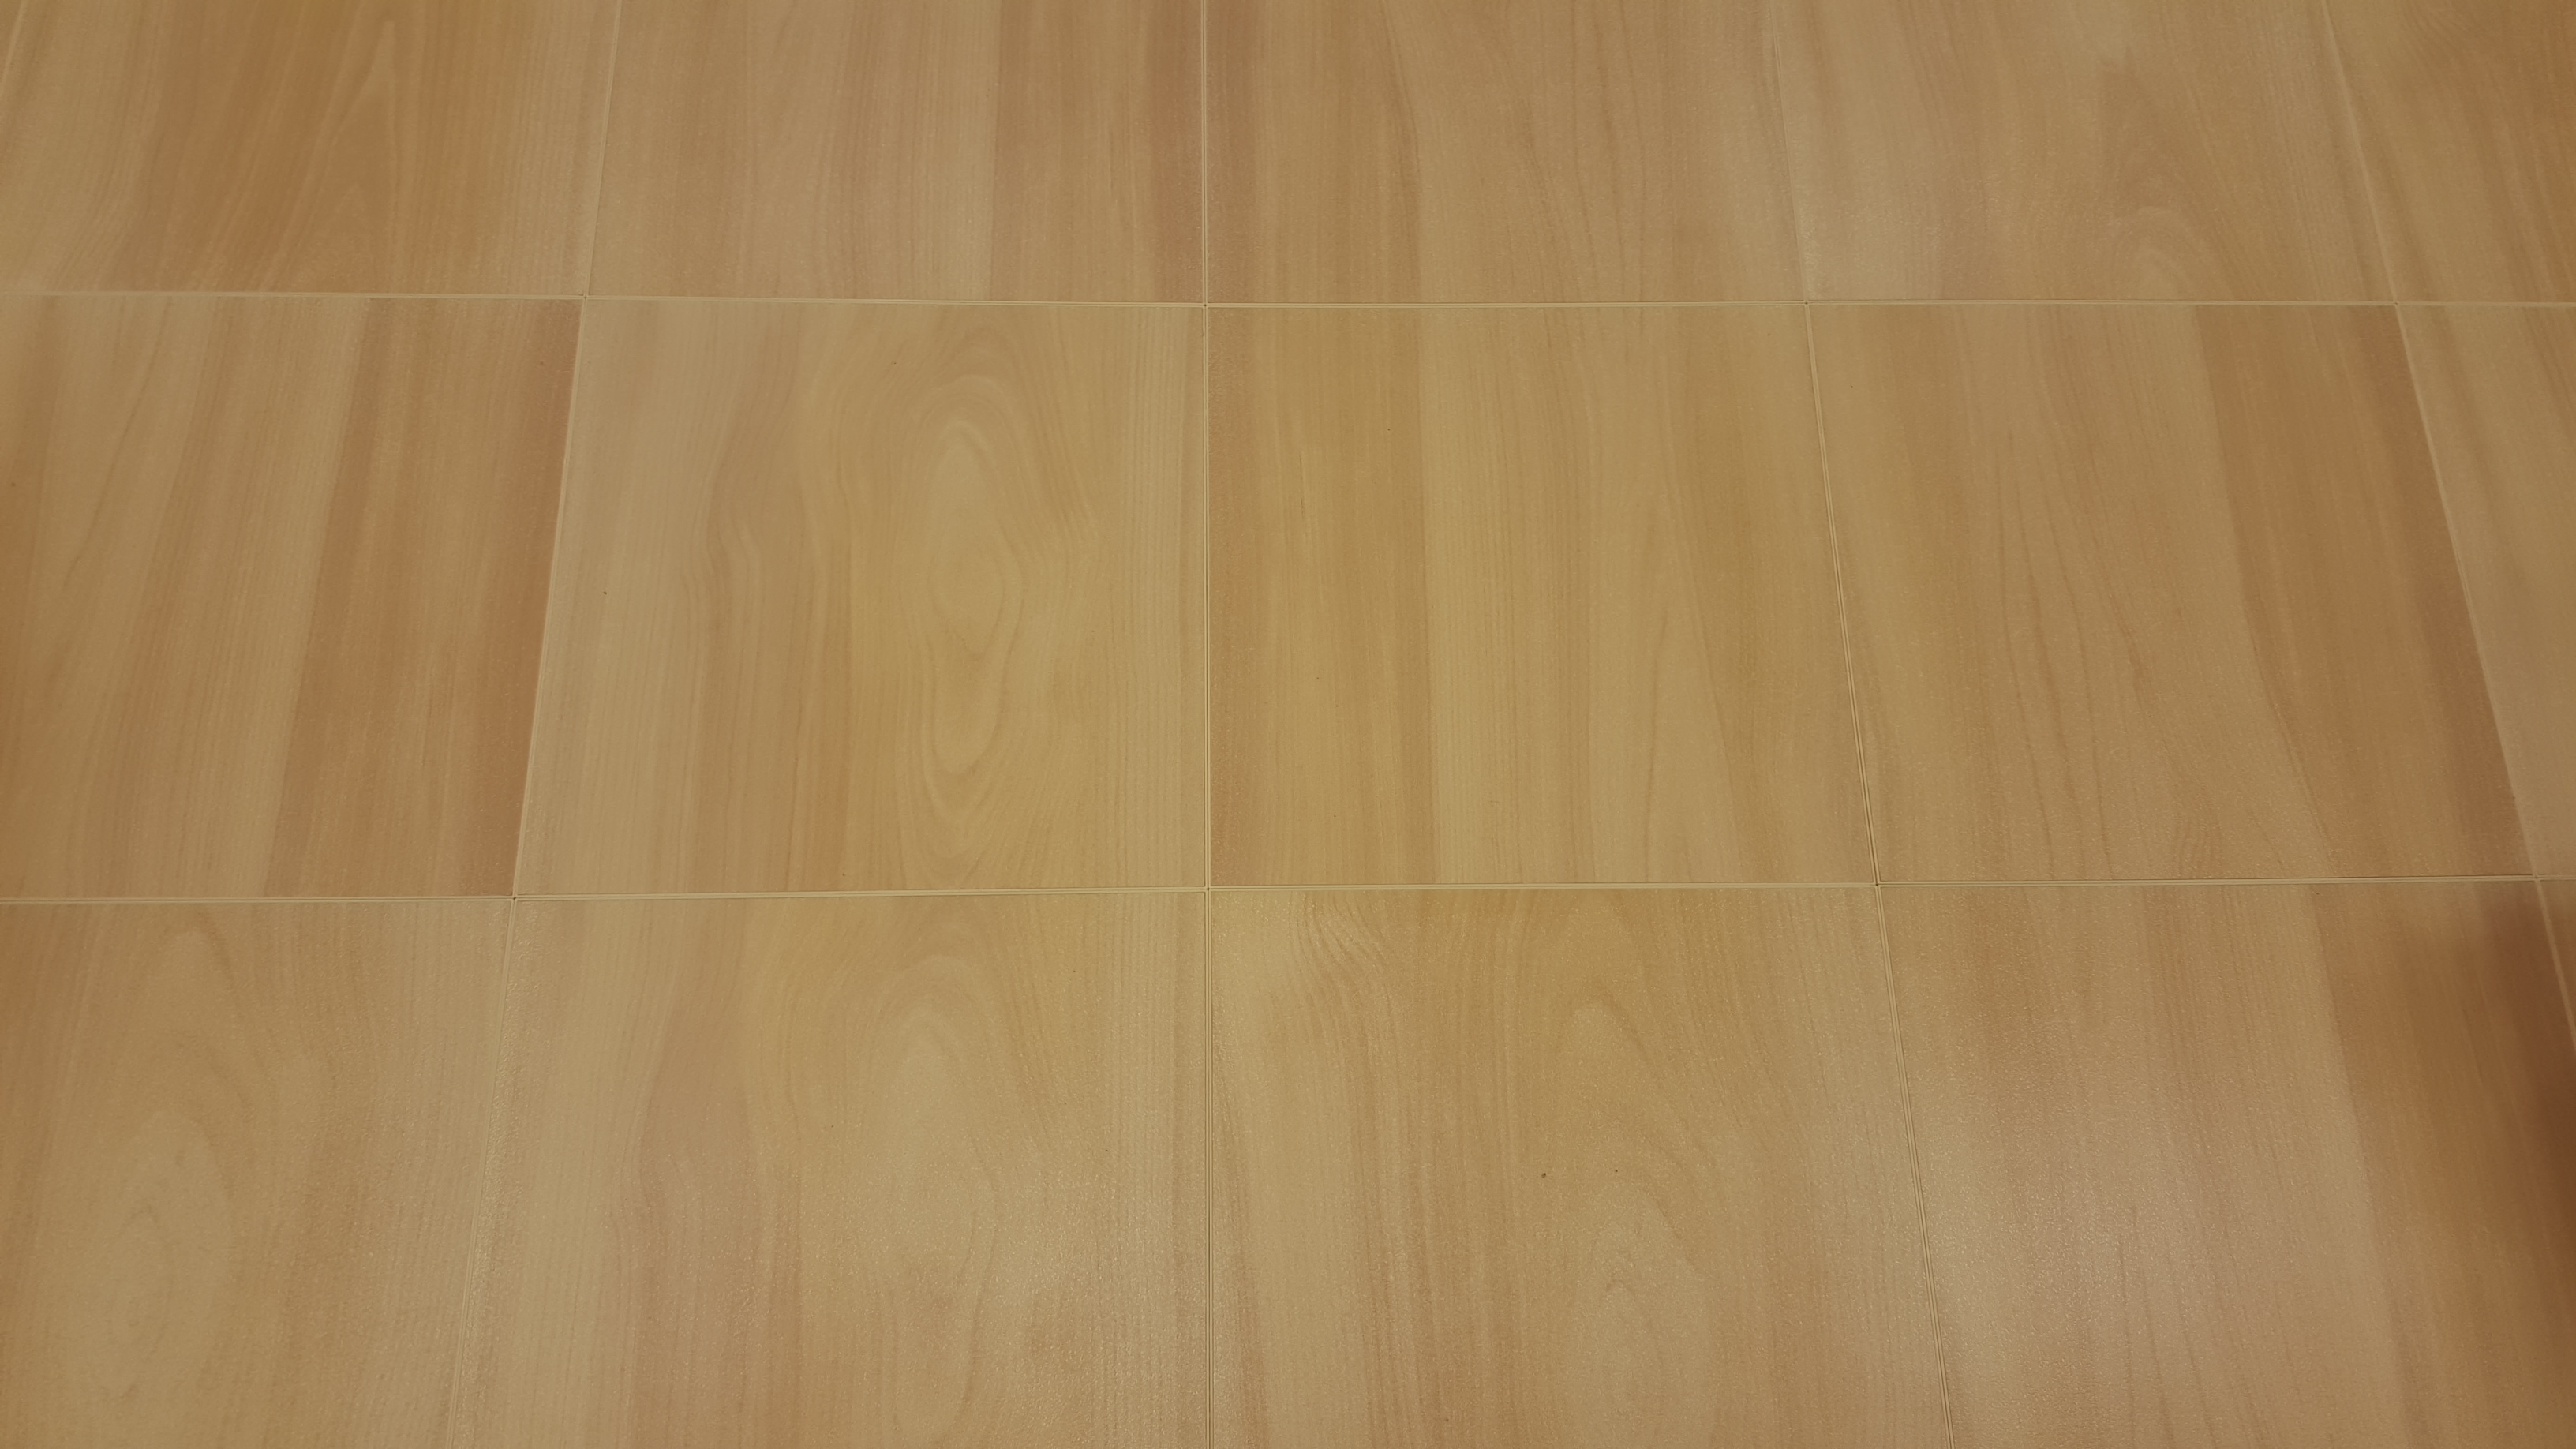 Rubber Floor Underlayment 3 mm x 4x50 Ft. Roll customer review photo 3